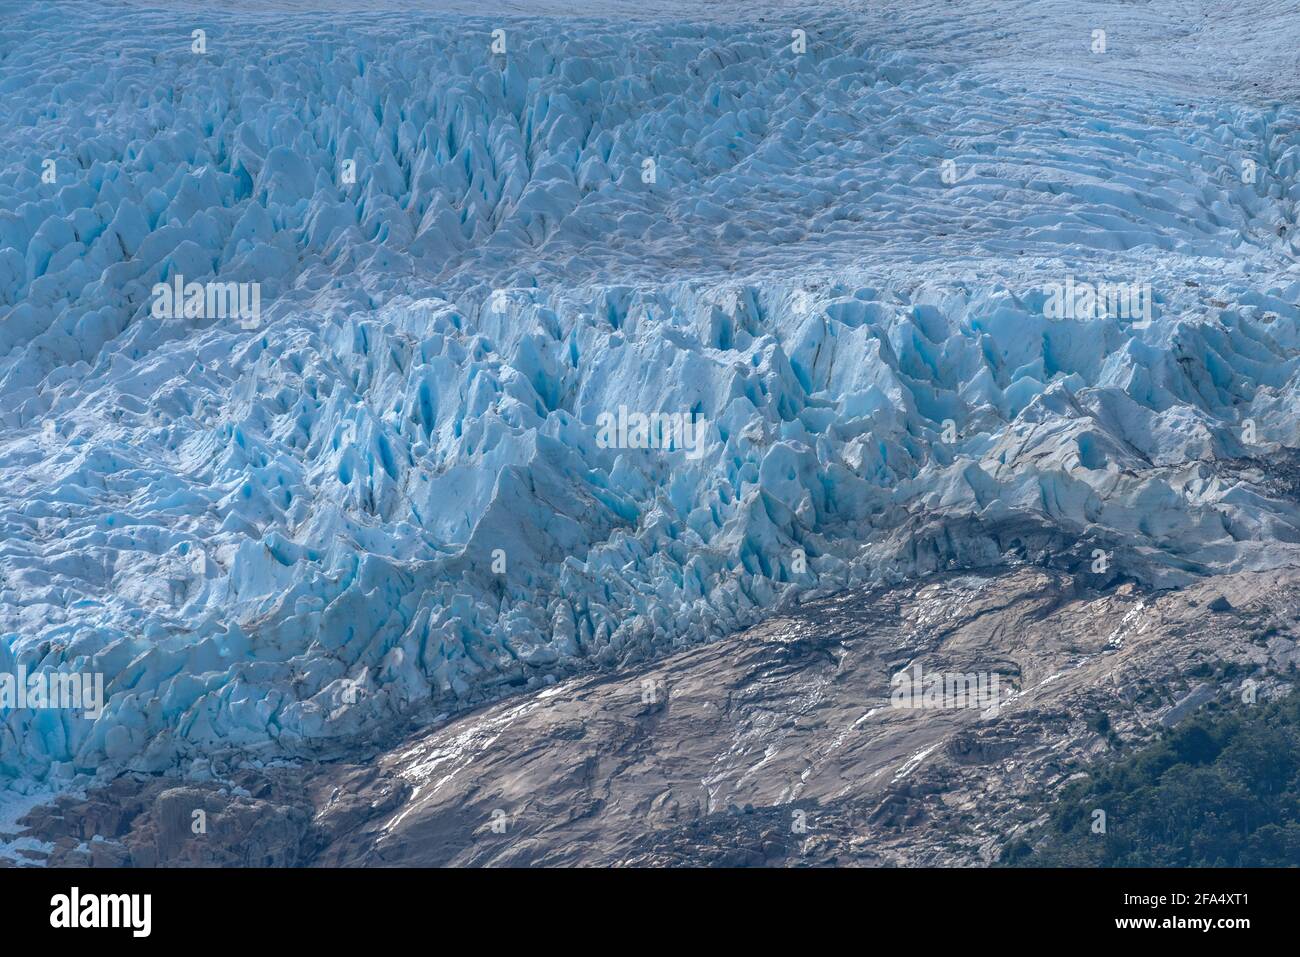 View of the Balmaceda Glacier in Ohiggins National Park, Chile Stock Photo